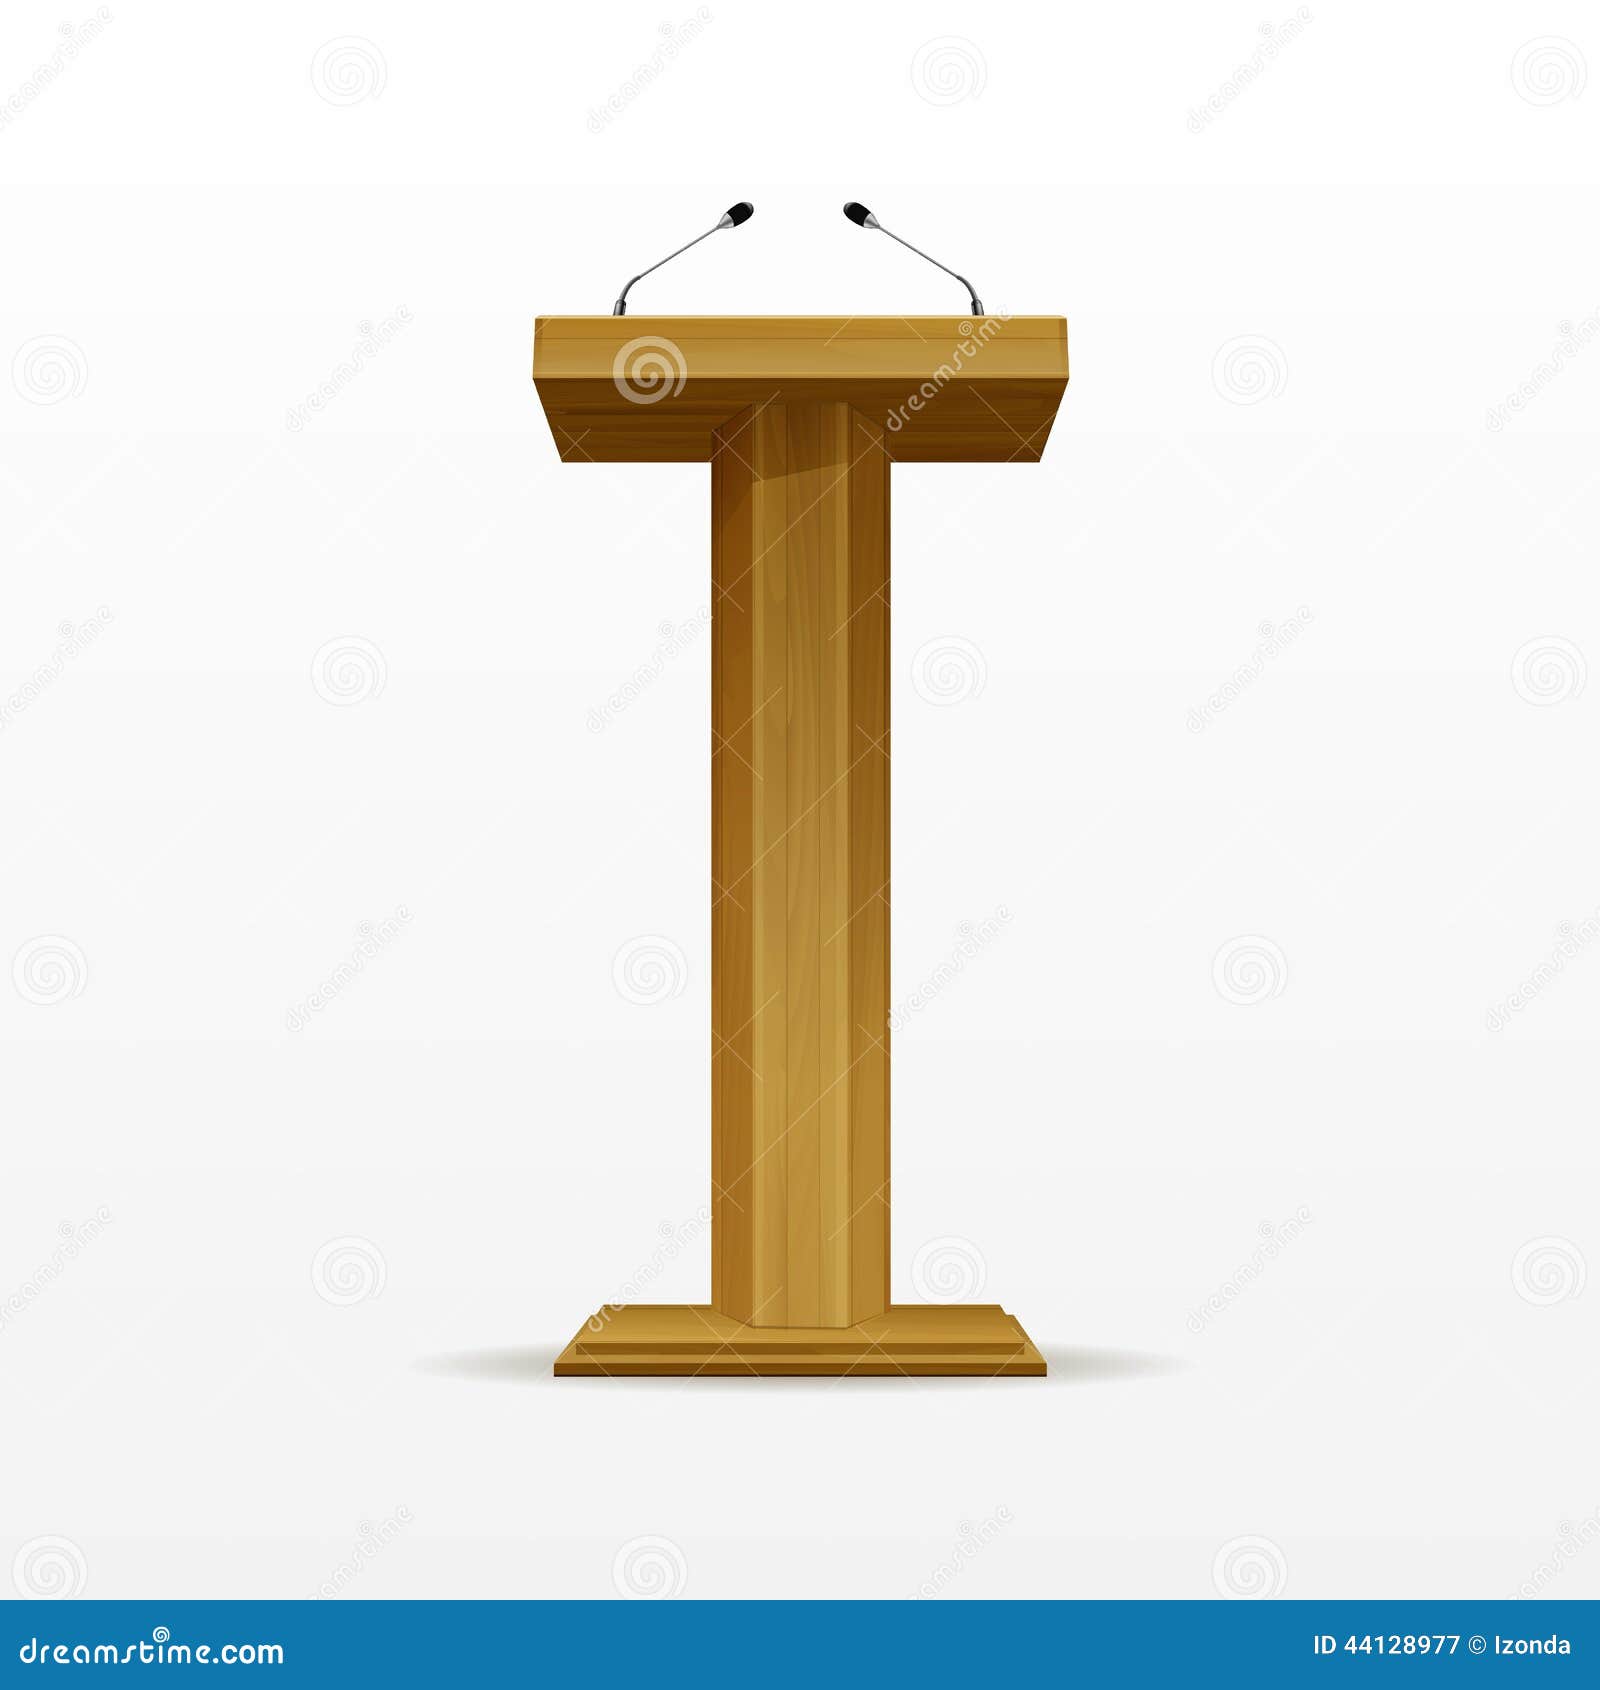 wood podium tribune rostrum stand with microphones